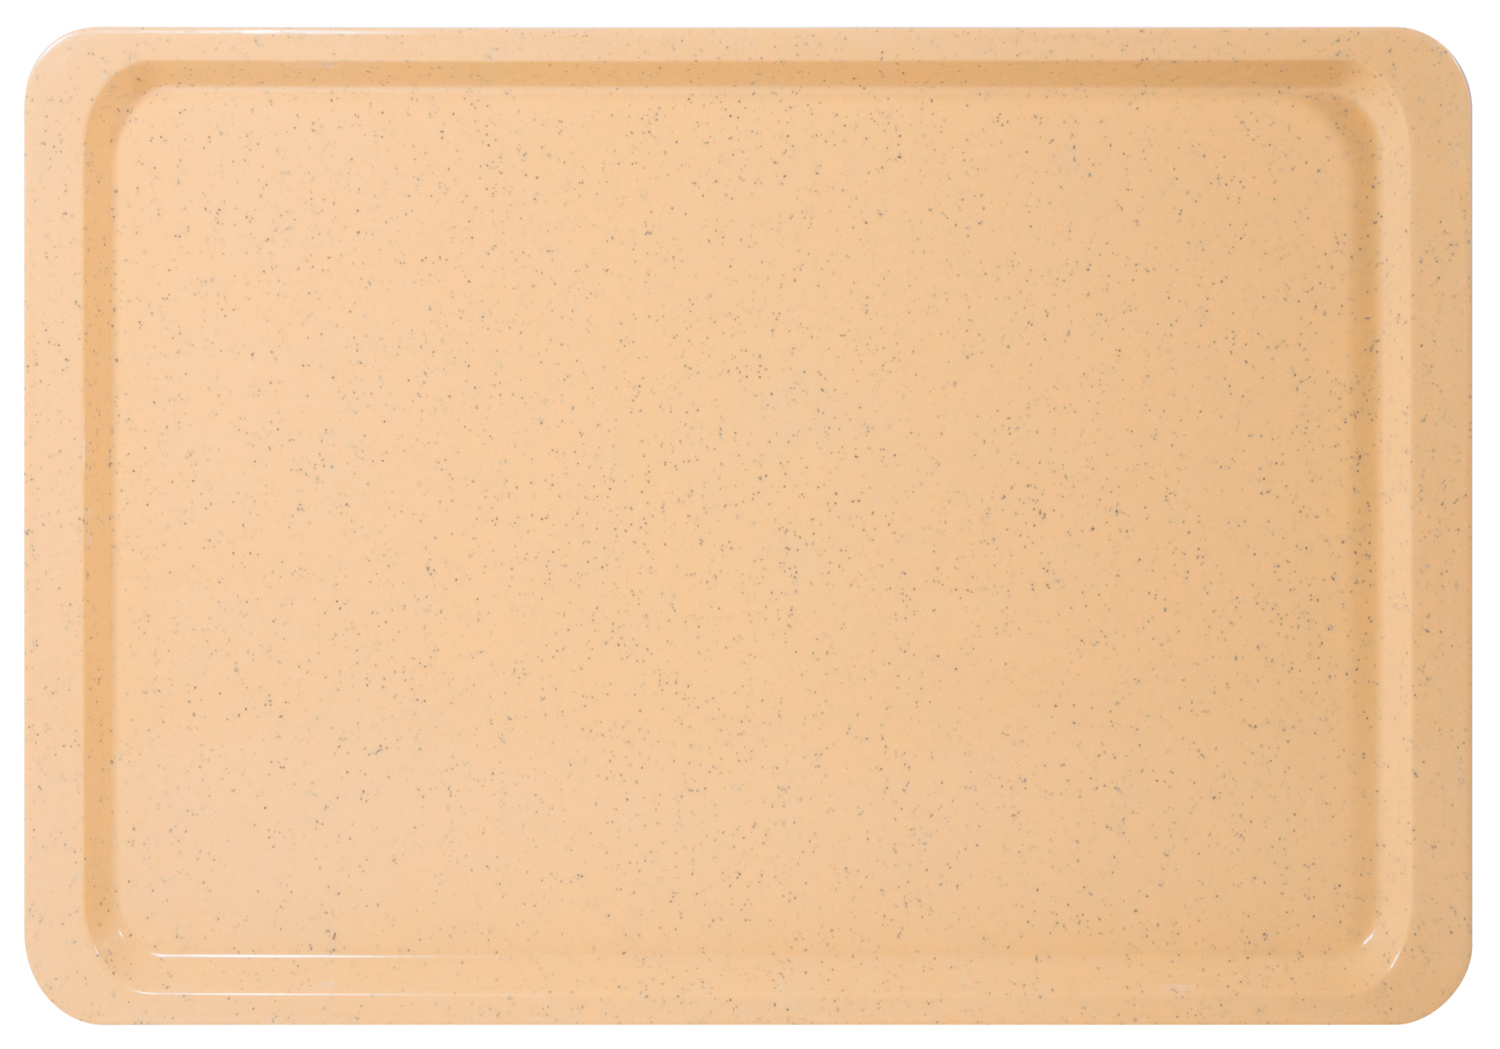 Tablett EASY GastroNorm GN 1/1, Farbe: Melba, aus glasfaserverstärktem Polyesterharz, Länge: 53 cm, Breite: 32,5 cm, Höhe: 1,6 cm